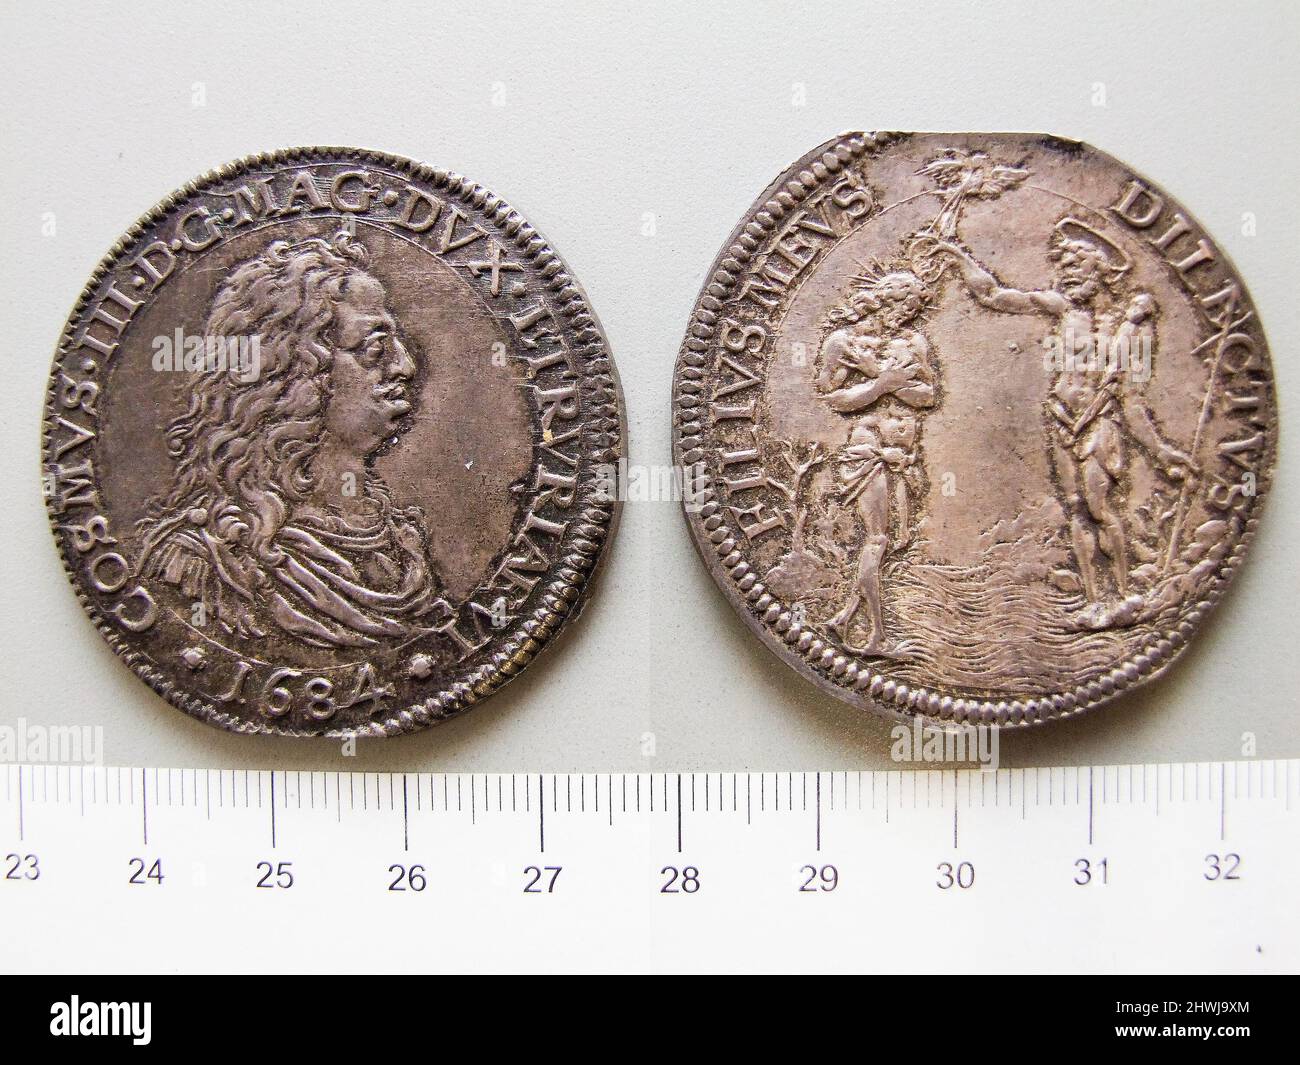 1 Piastra de Florence avec Cosimo de’ Medici III Objet: Cosimo de’ Medici III, Italien, 1642–1723 monnaie: Florence Banque D'Images